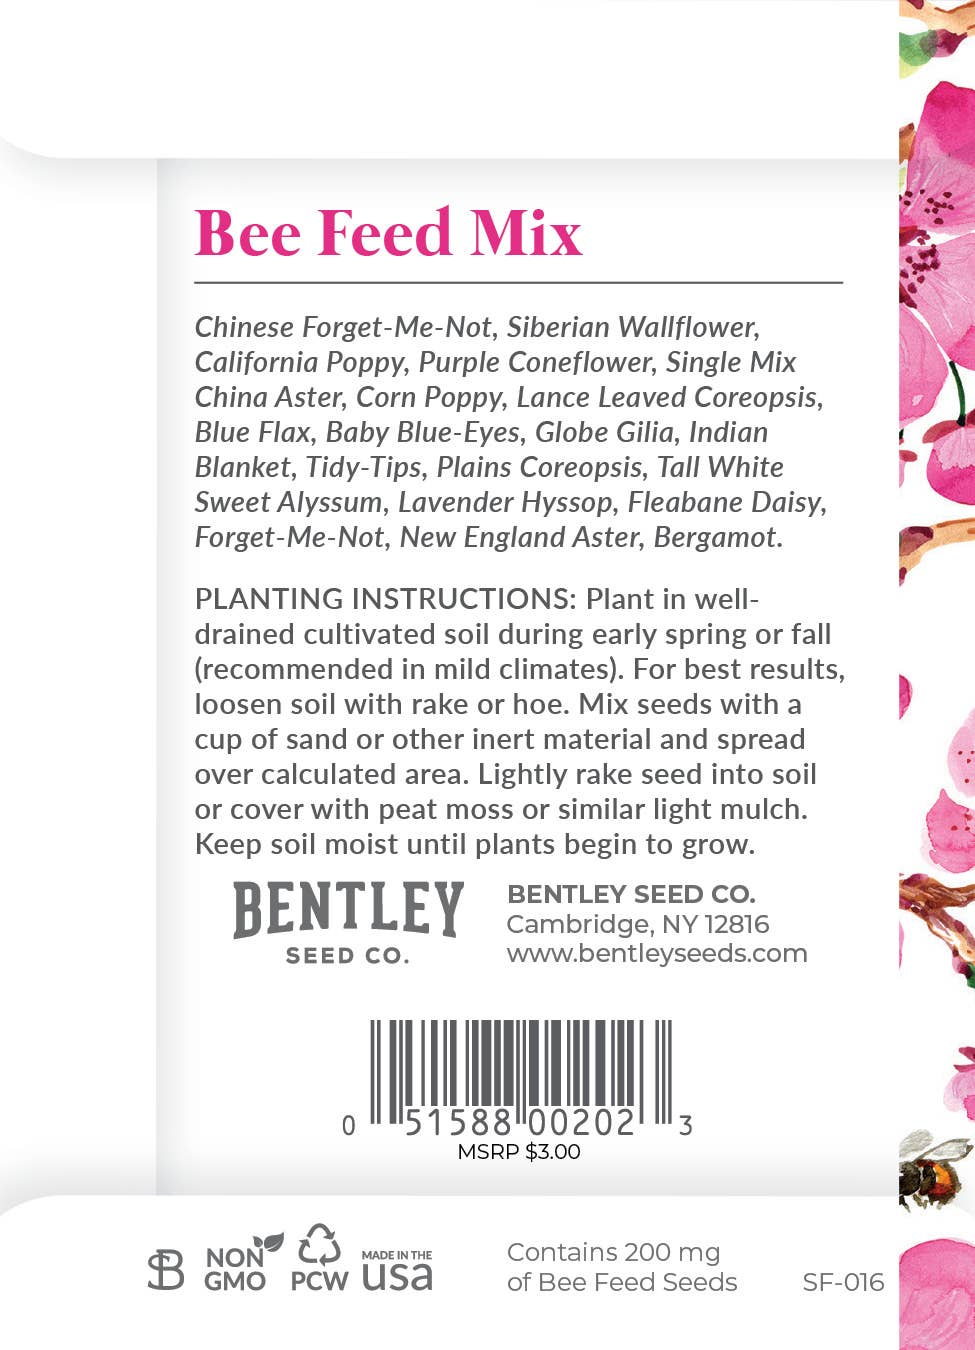 Bentley Seed Co. - Bee Feed Wildflower Seed Packets